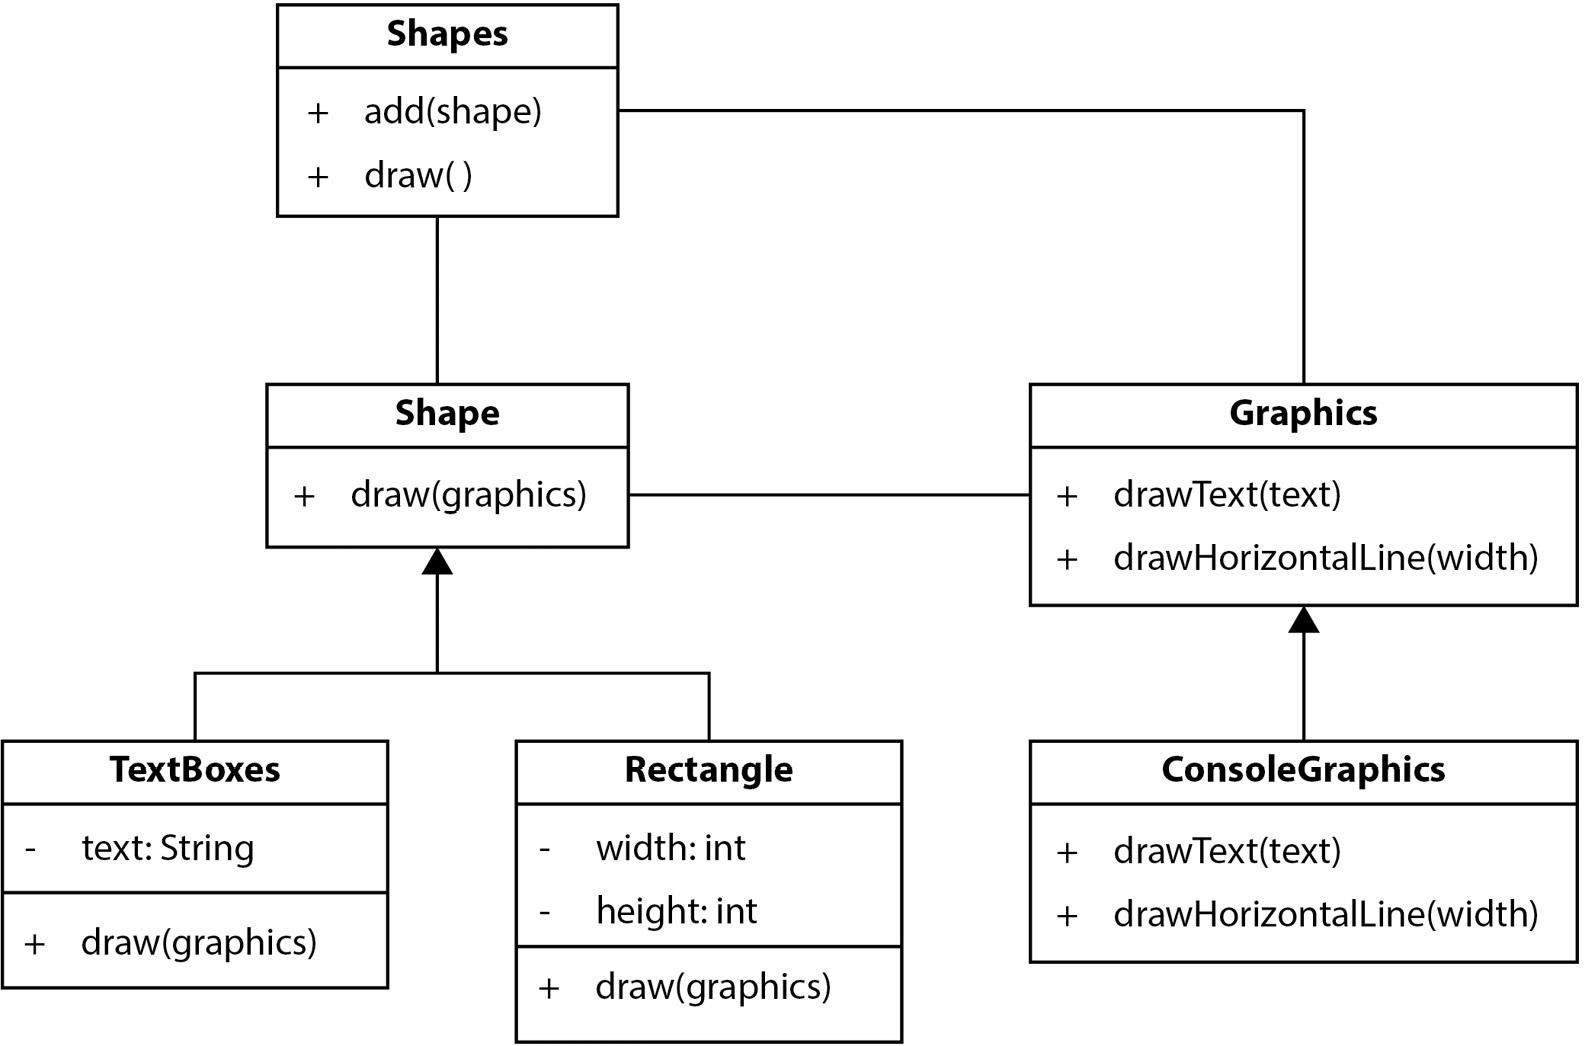 Figure 7.1 – UML diagram for shapes code